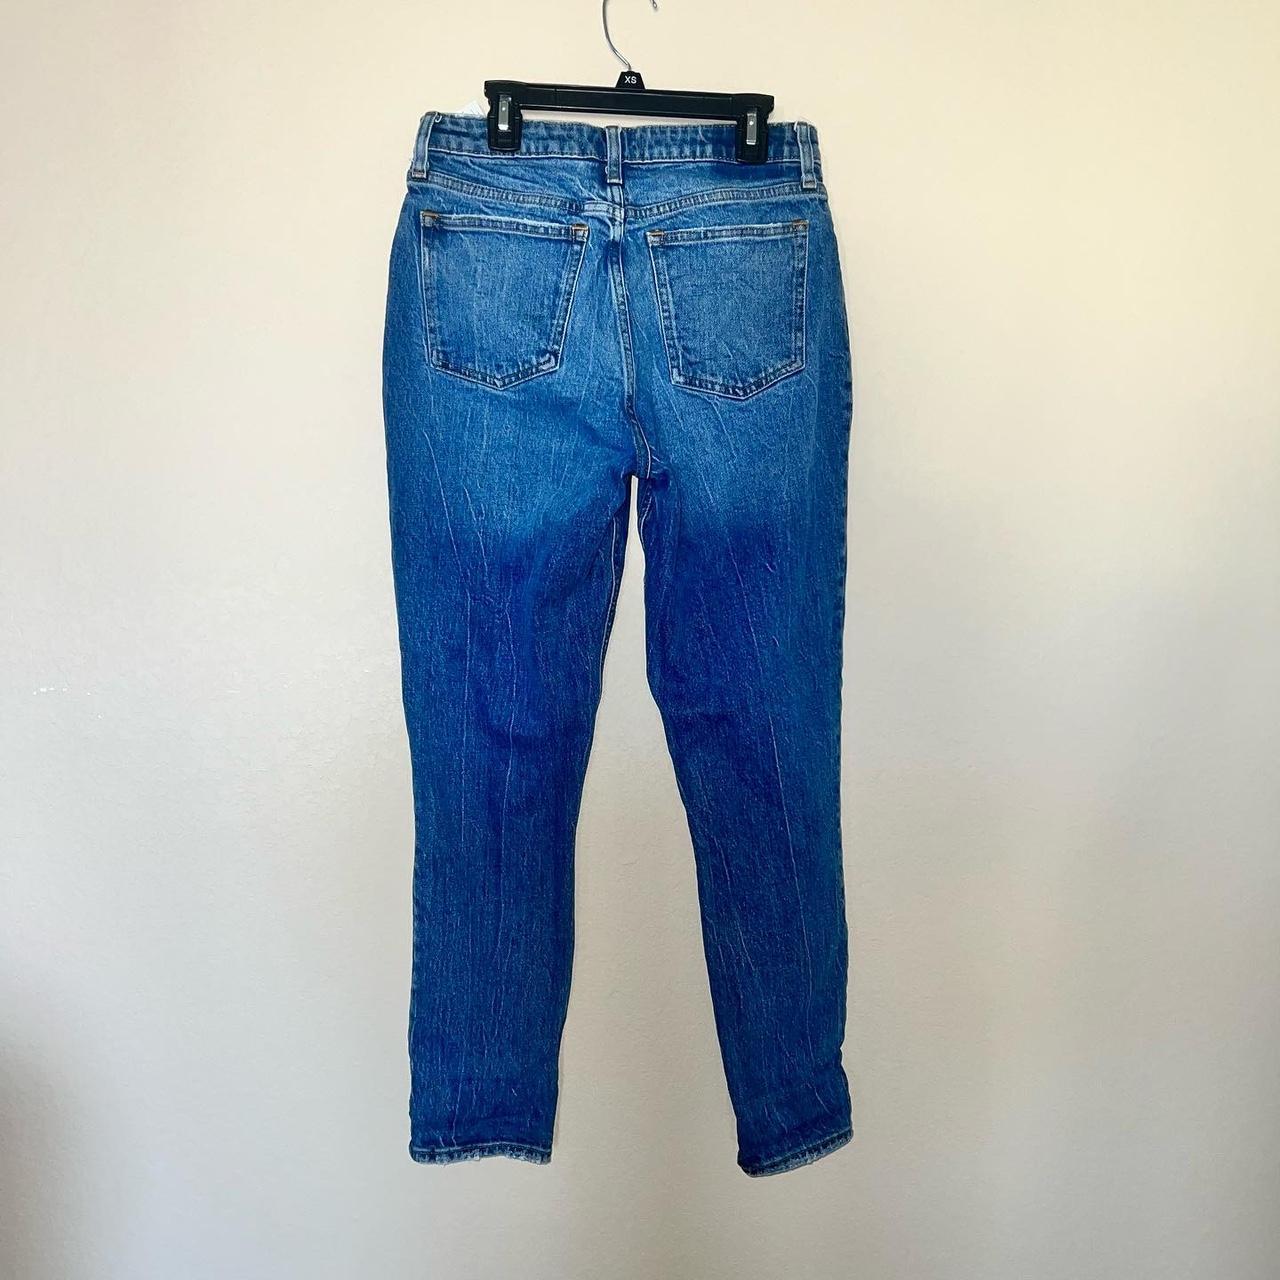 Abercrombie Curve Love Jeans Size 4/27 HR Skinny - Depop